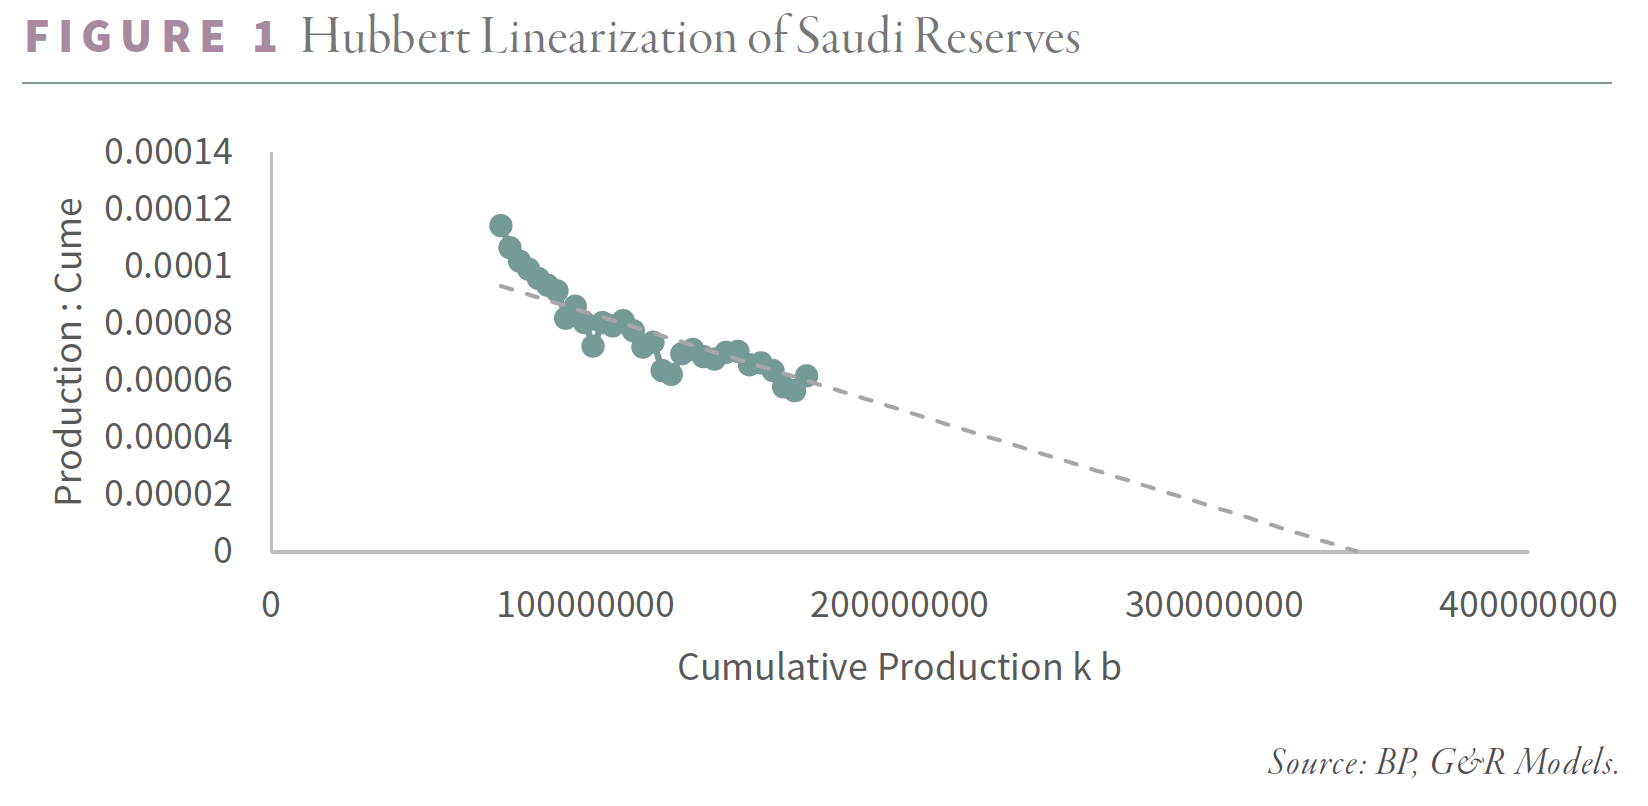 Hubbert Linearization of Saudi Reserves